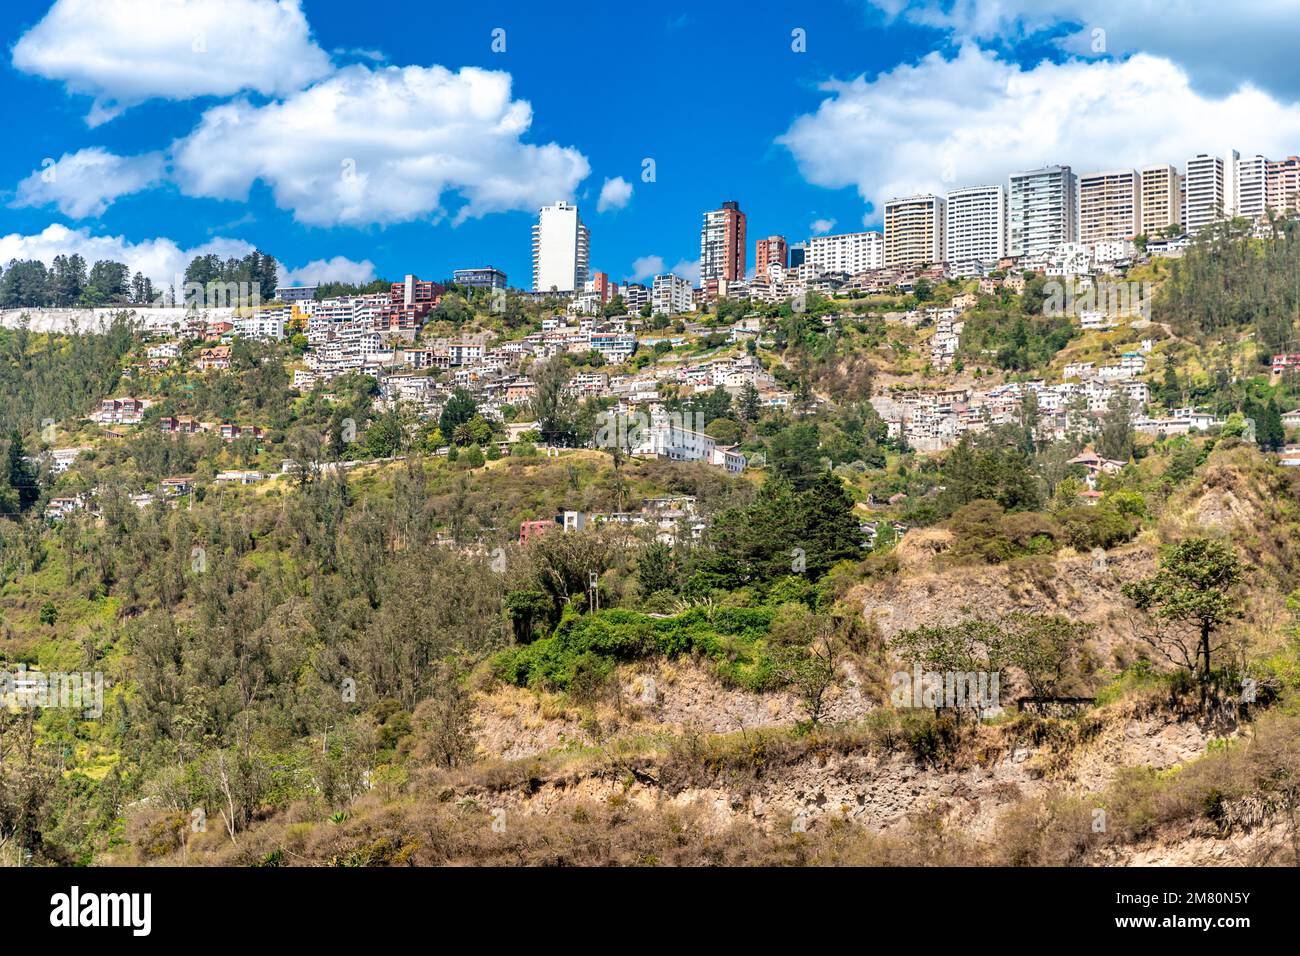 Quito, Equador panorama of the capital city Stock Photo